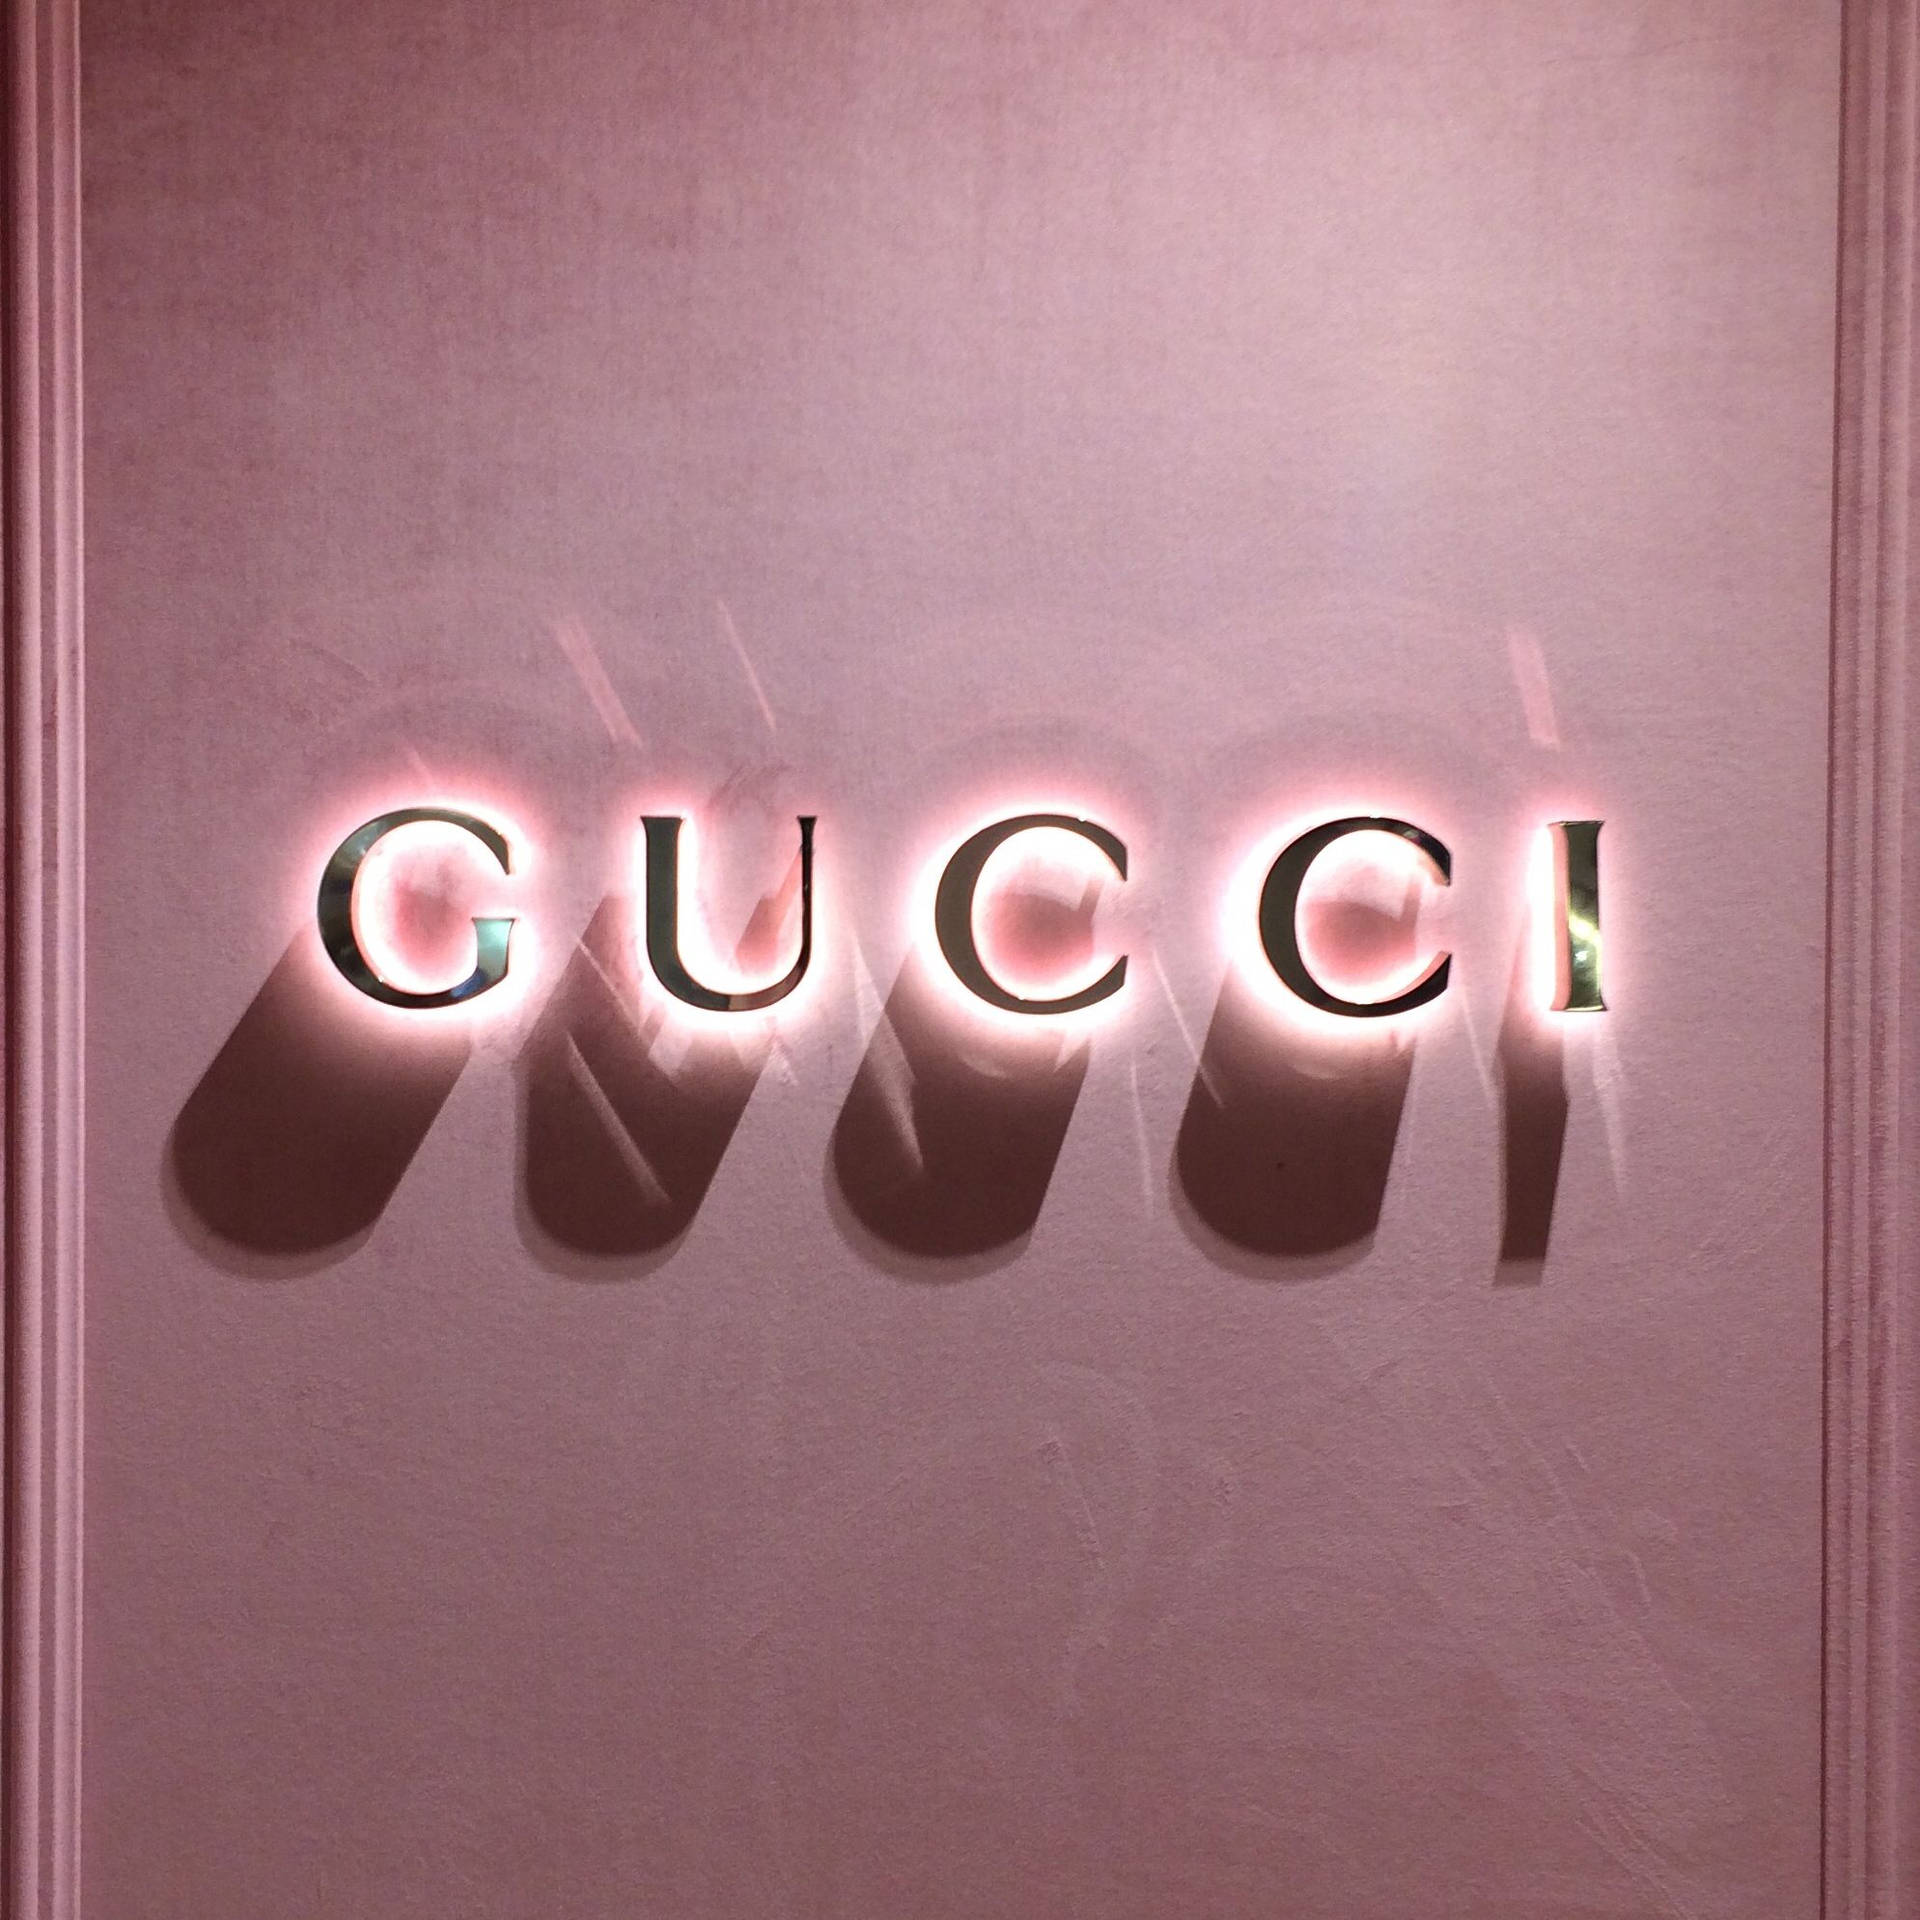 Gucci Rose Gold Backlight Background